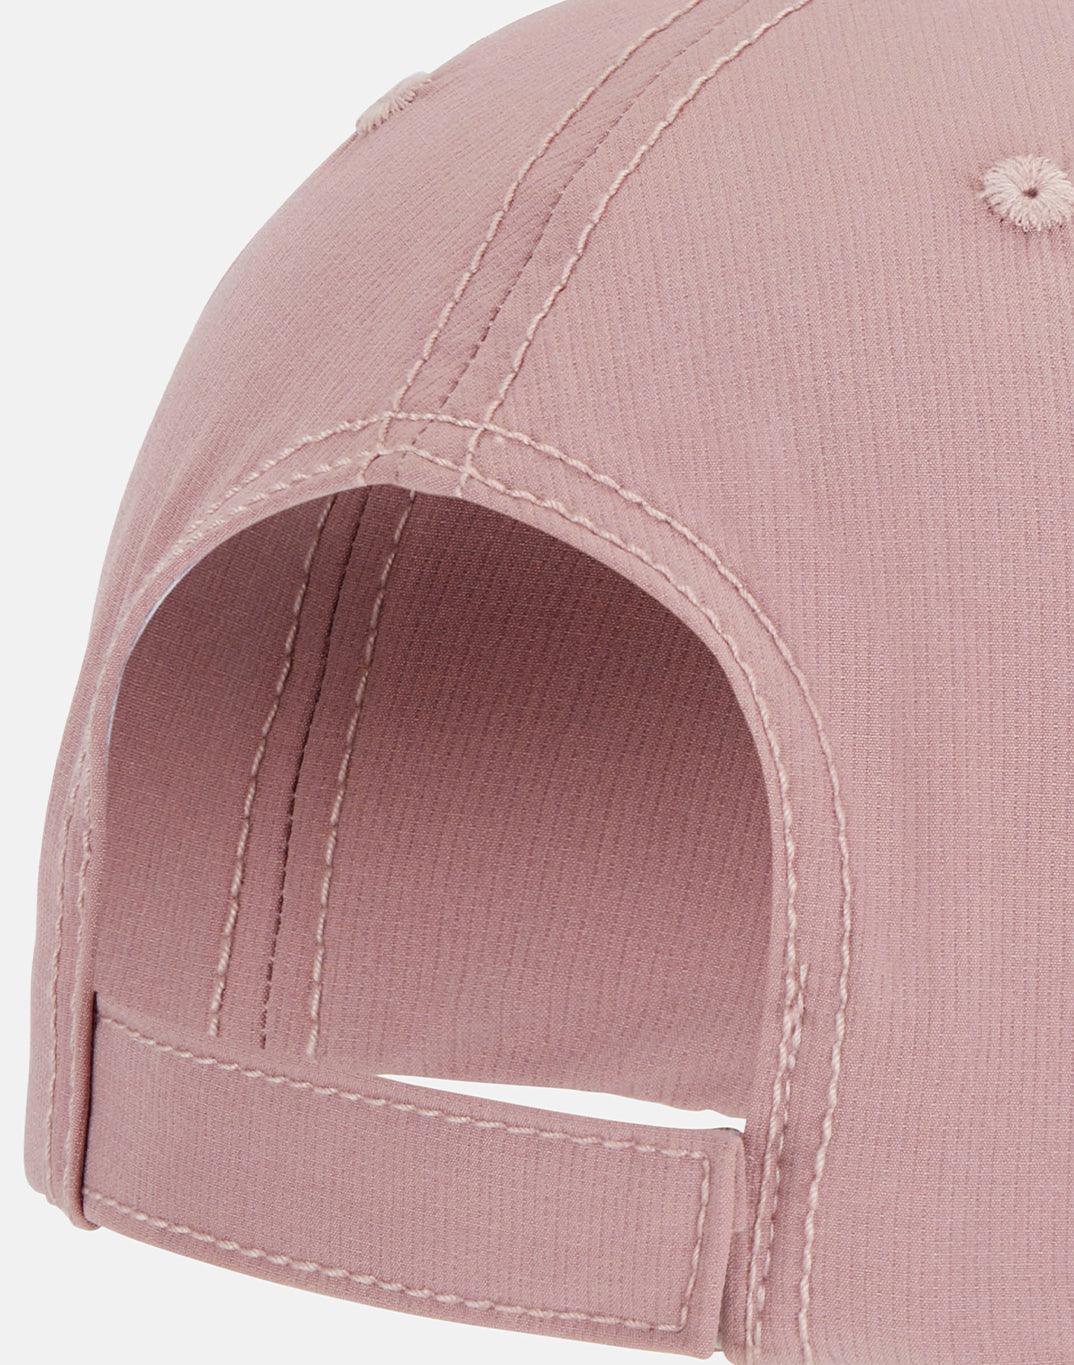 No Shade Cap In Dusty Pink - Headwear - Gym+Coffee IE